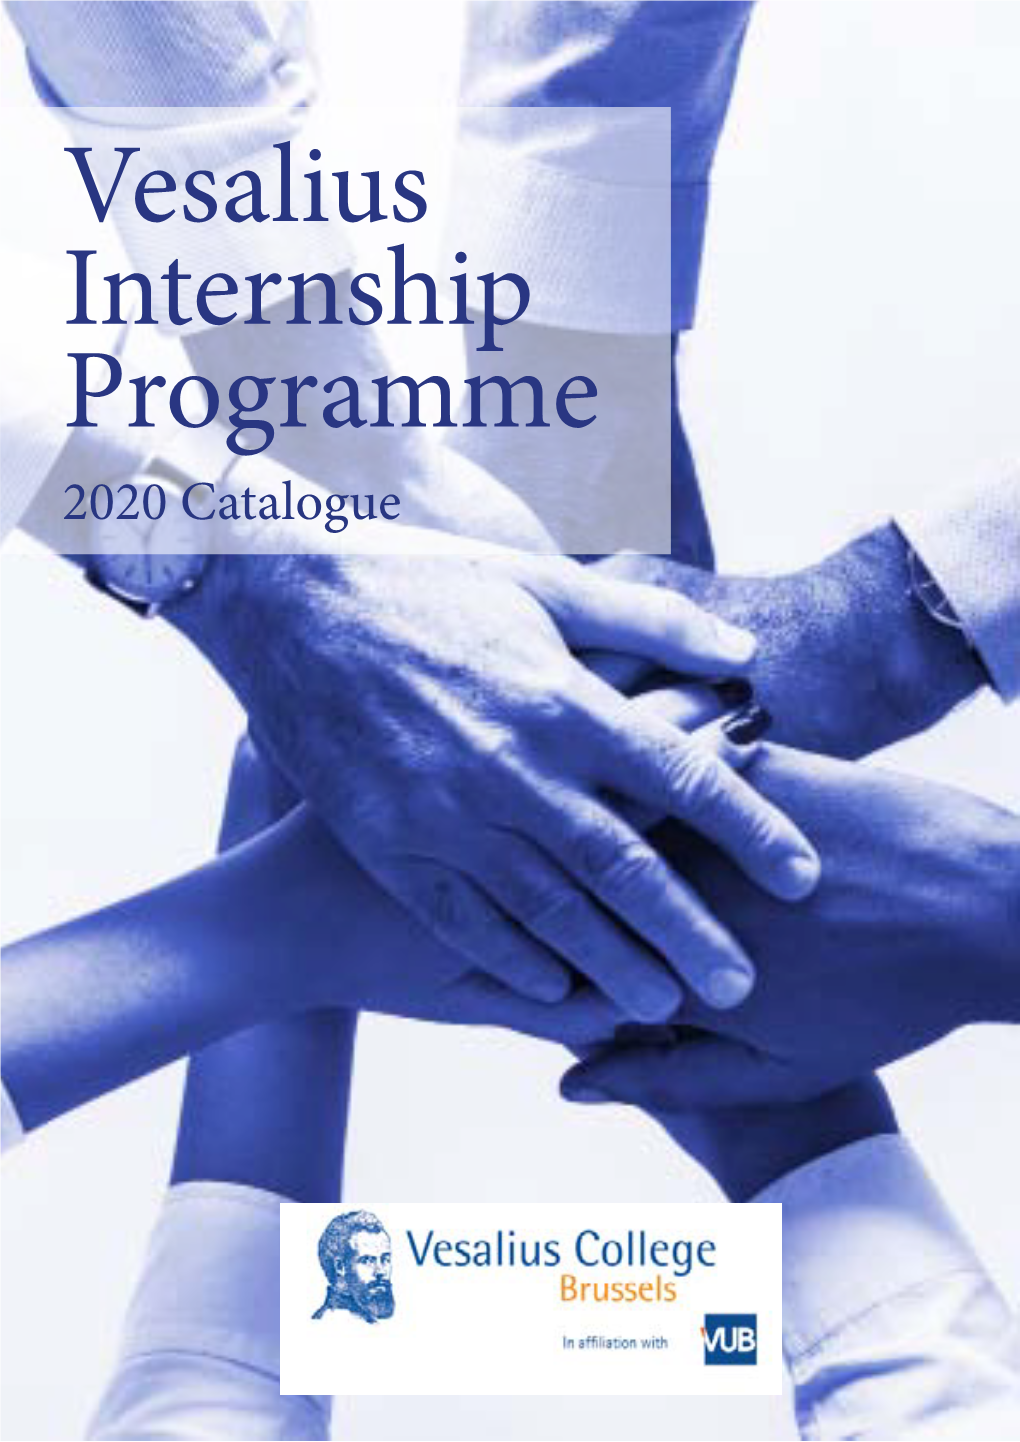 Vesalius Internship Programme 2020 Catalogue